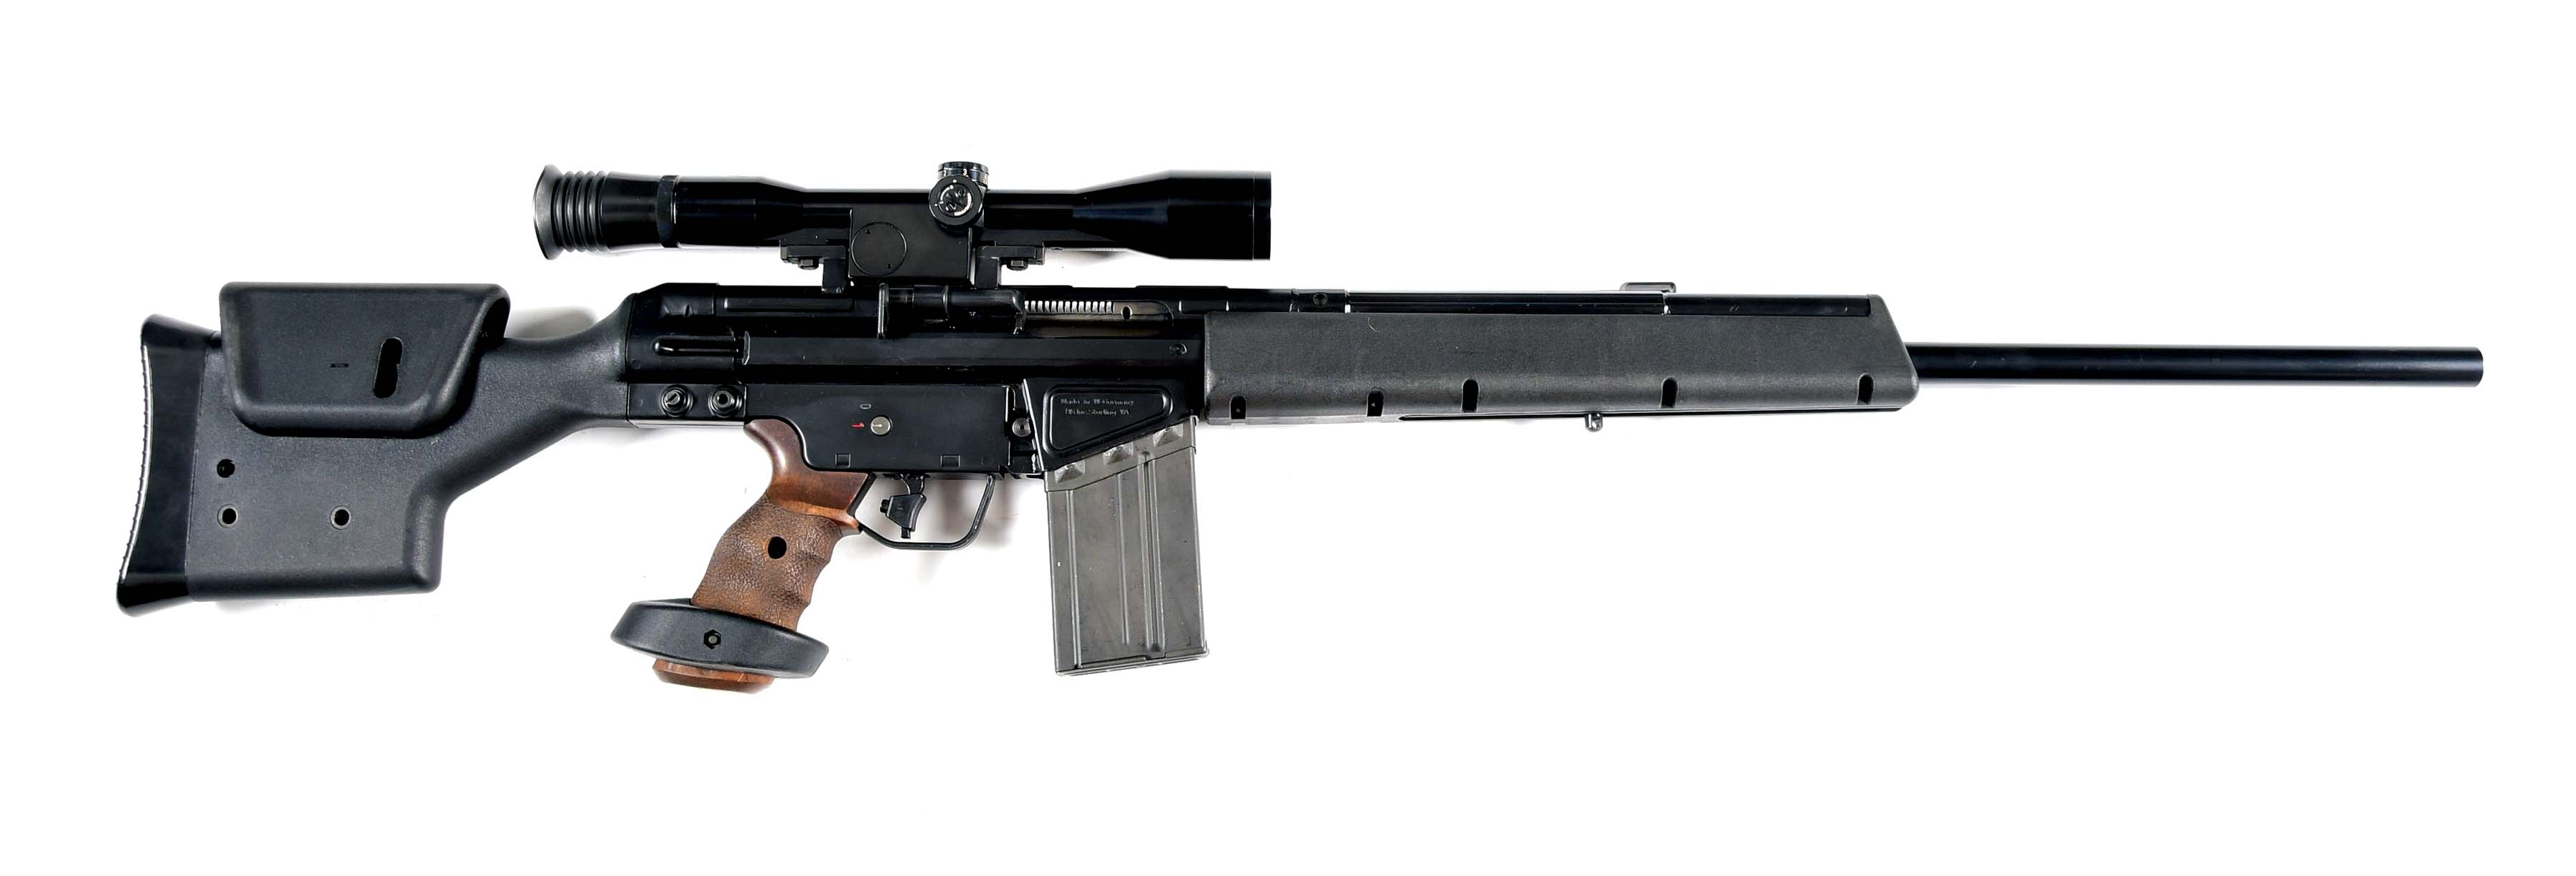 Hk Psg1 (Rifle Sniper 7.62Mm) / H&K PSG-1 - Sniper Central : So what ...